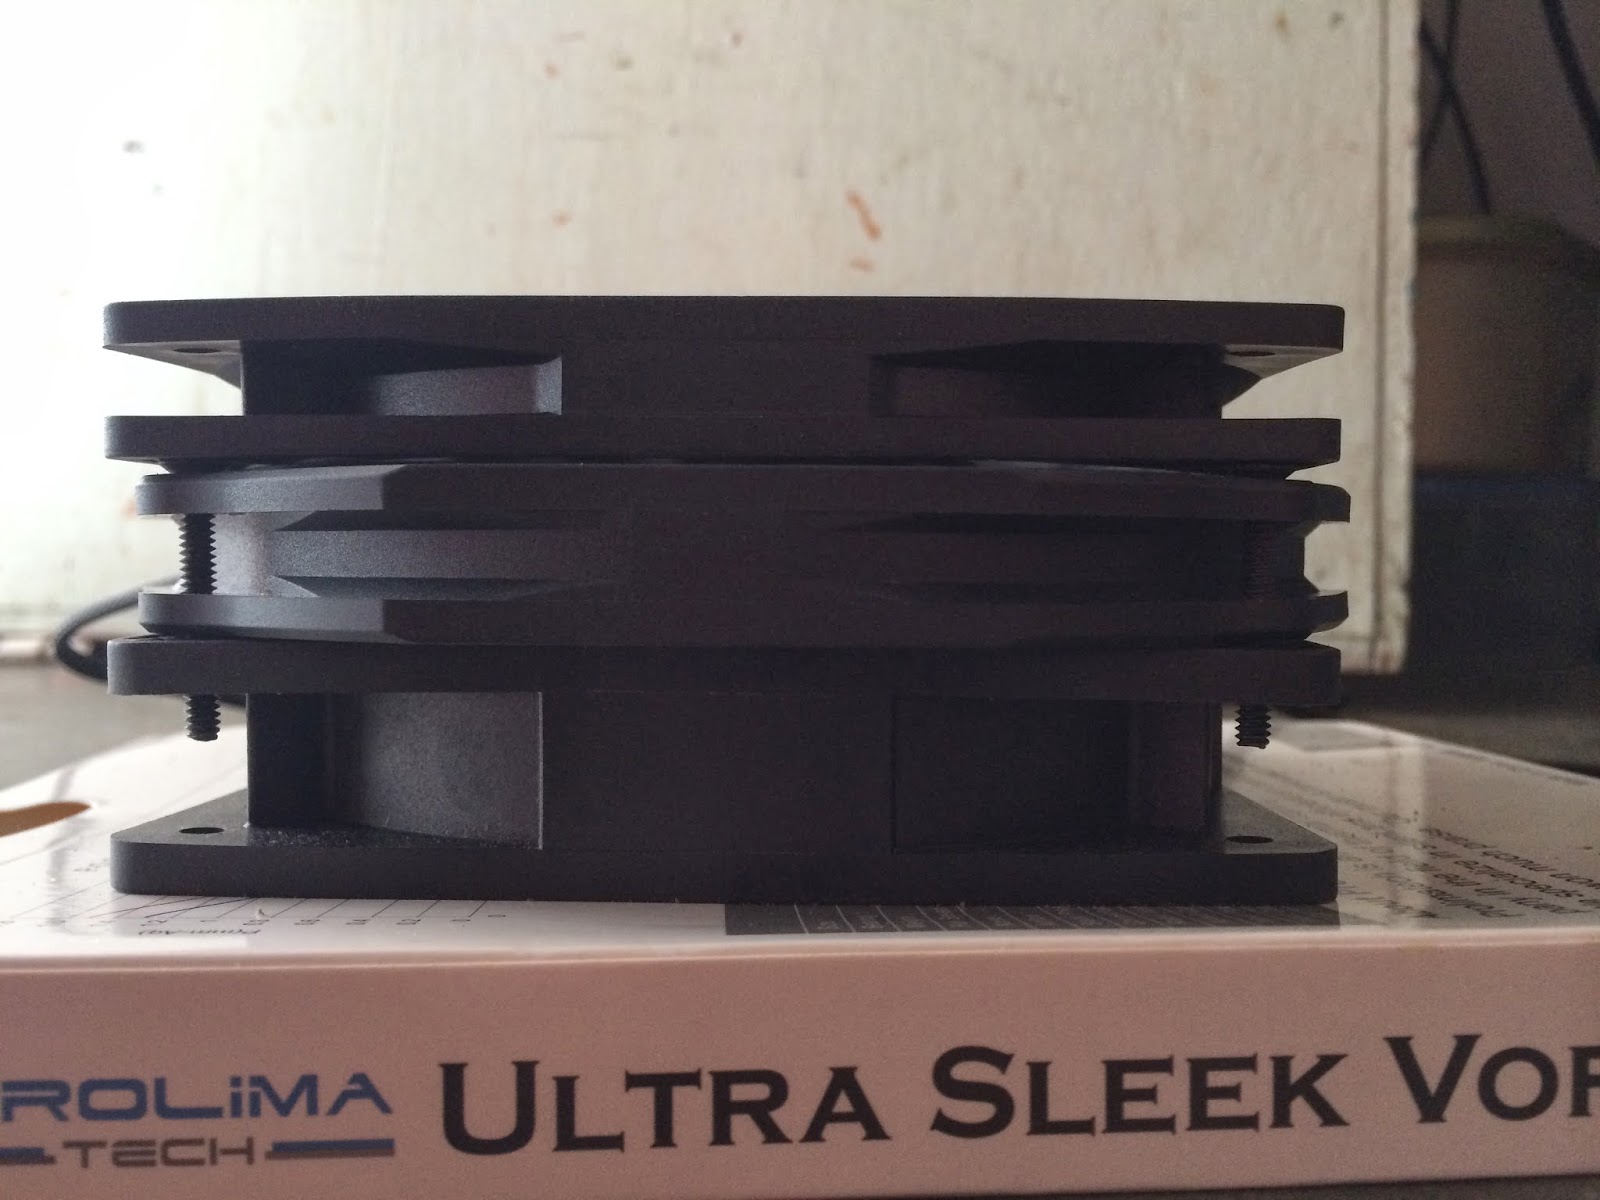 Prolimatech Ultra Sleek Vortex Performance Review 13